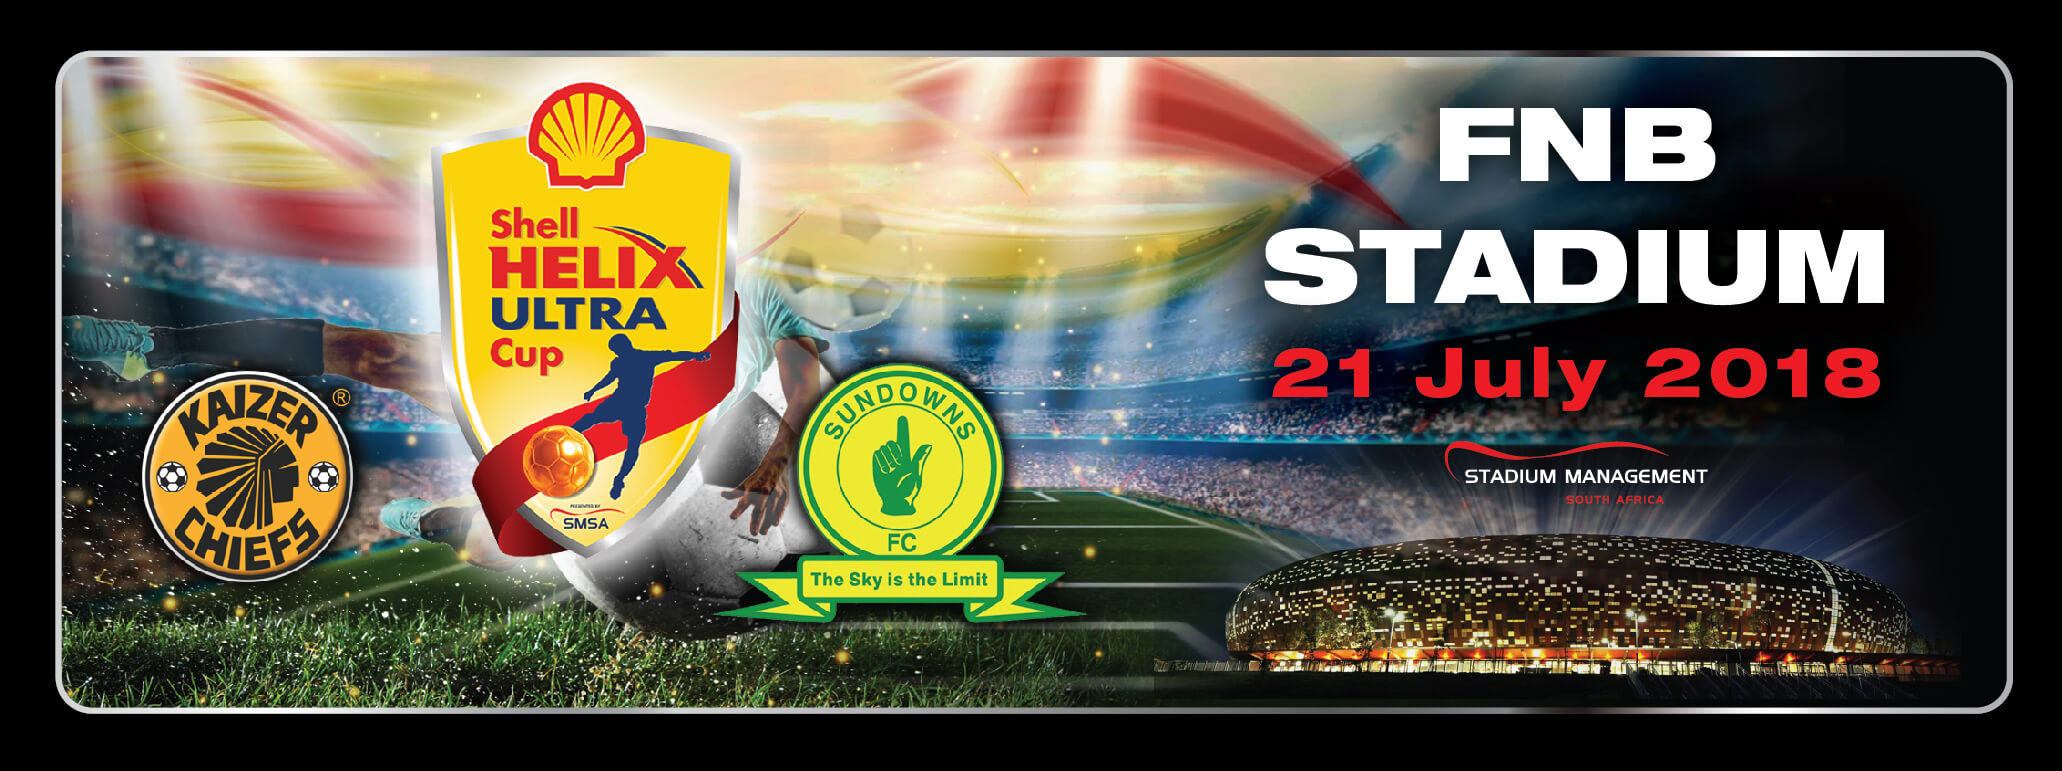 Kaizer Chiefs vs Mamelodi Sundows - Shell Helix Ultra Cup - Beluga Hospitality Banner